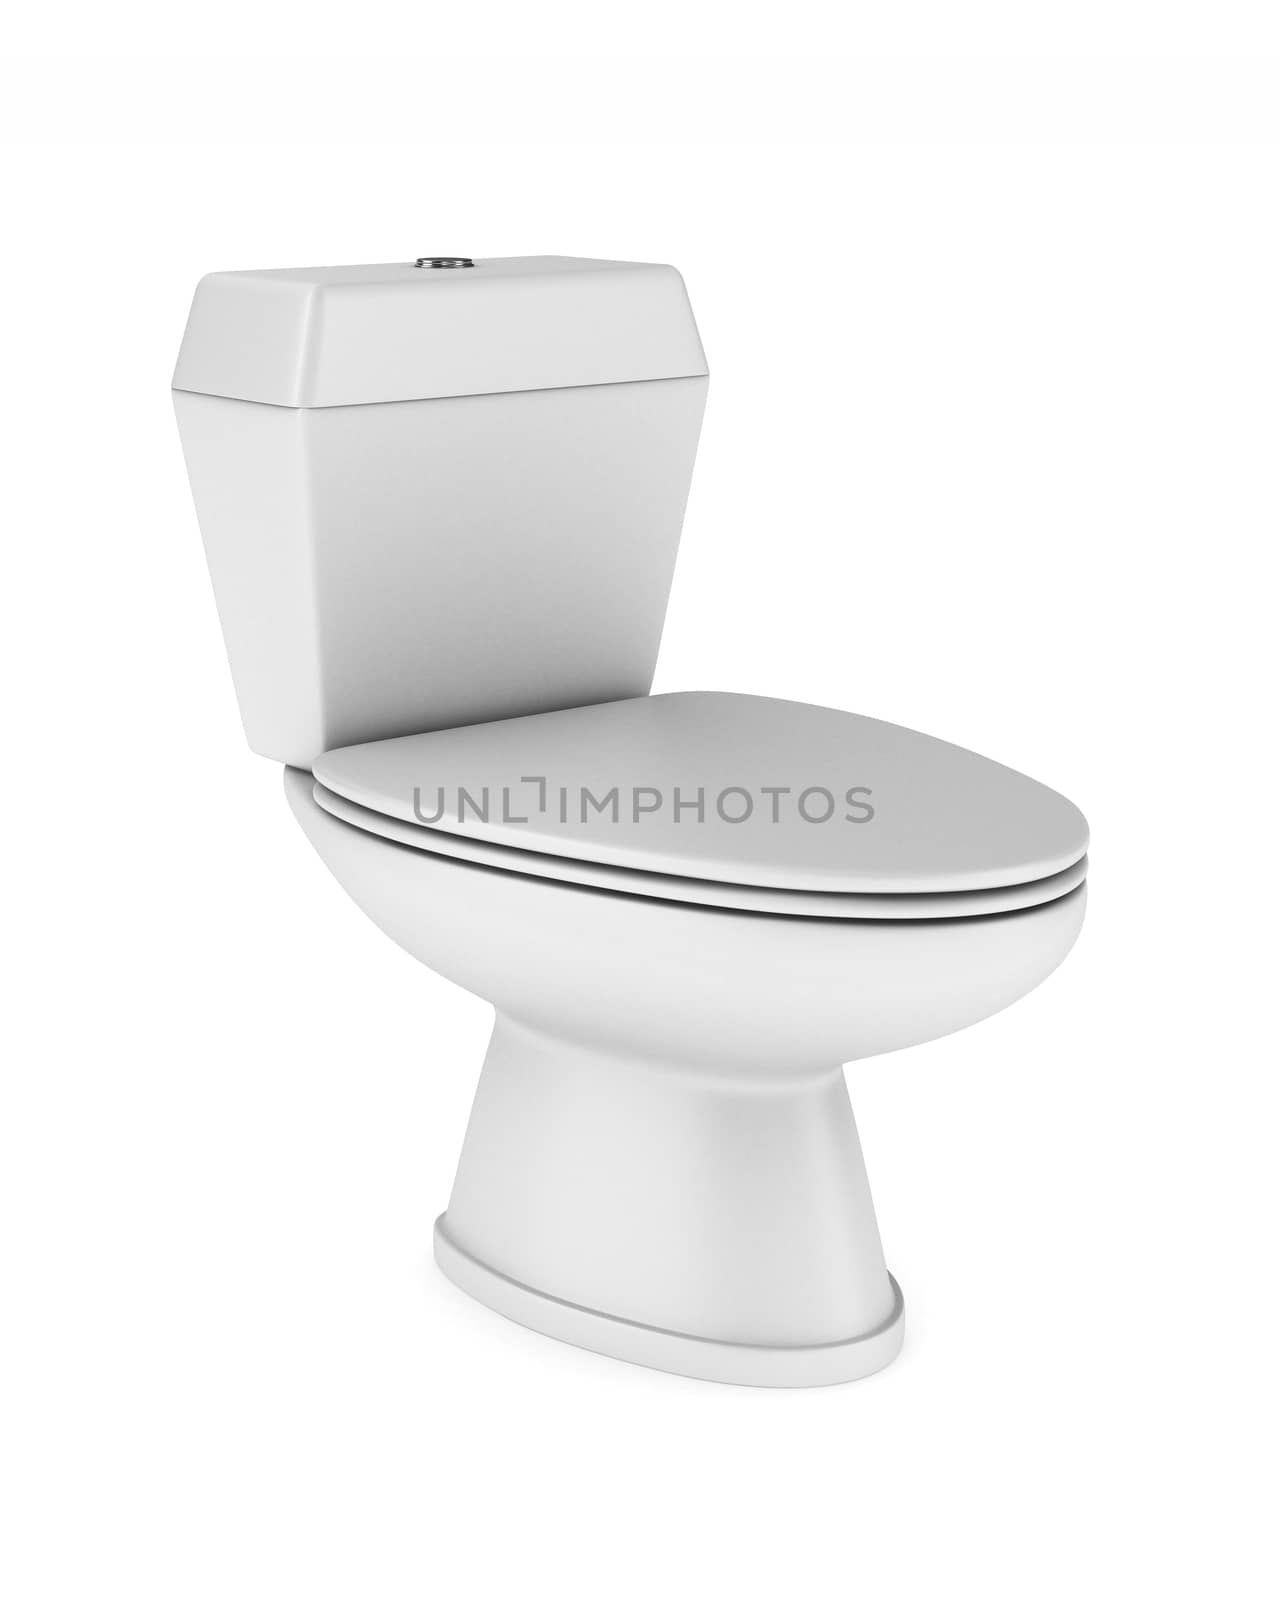 Toilet bowl on white background. Isolated 3D image